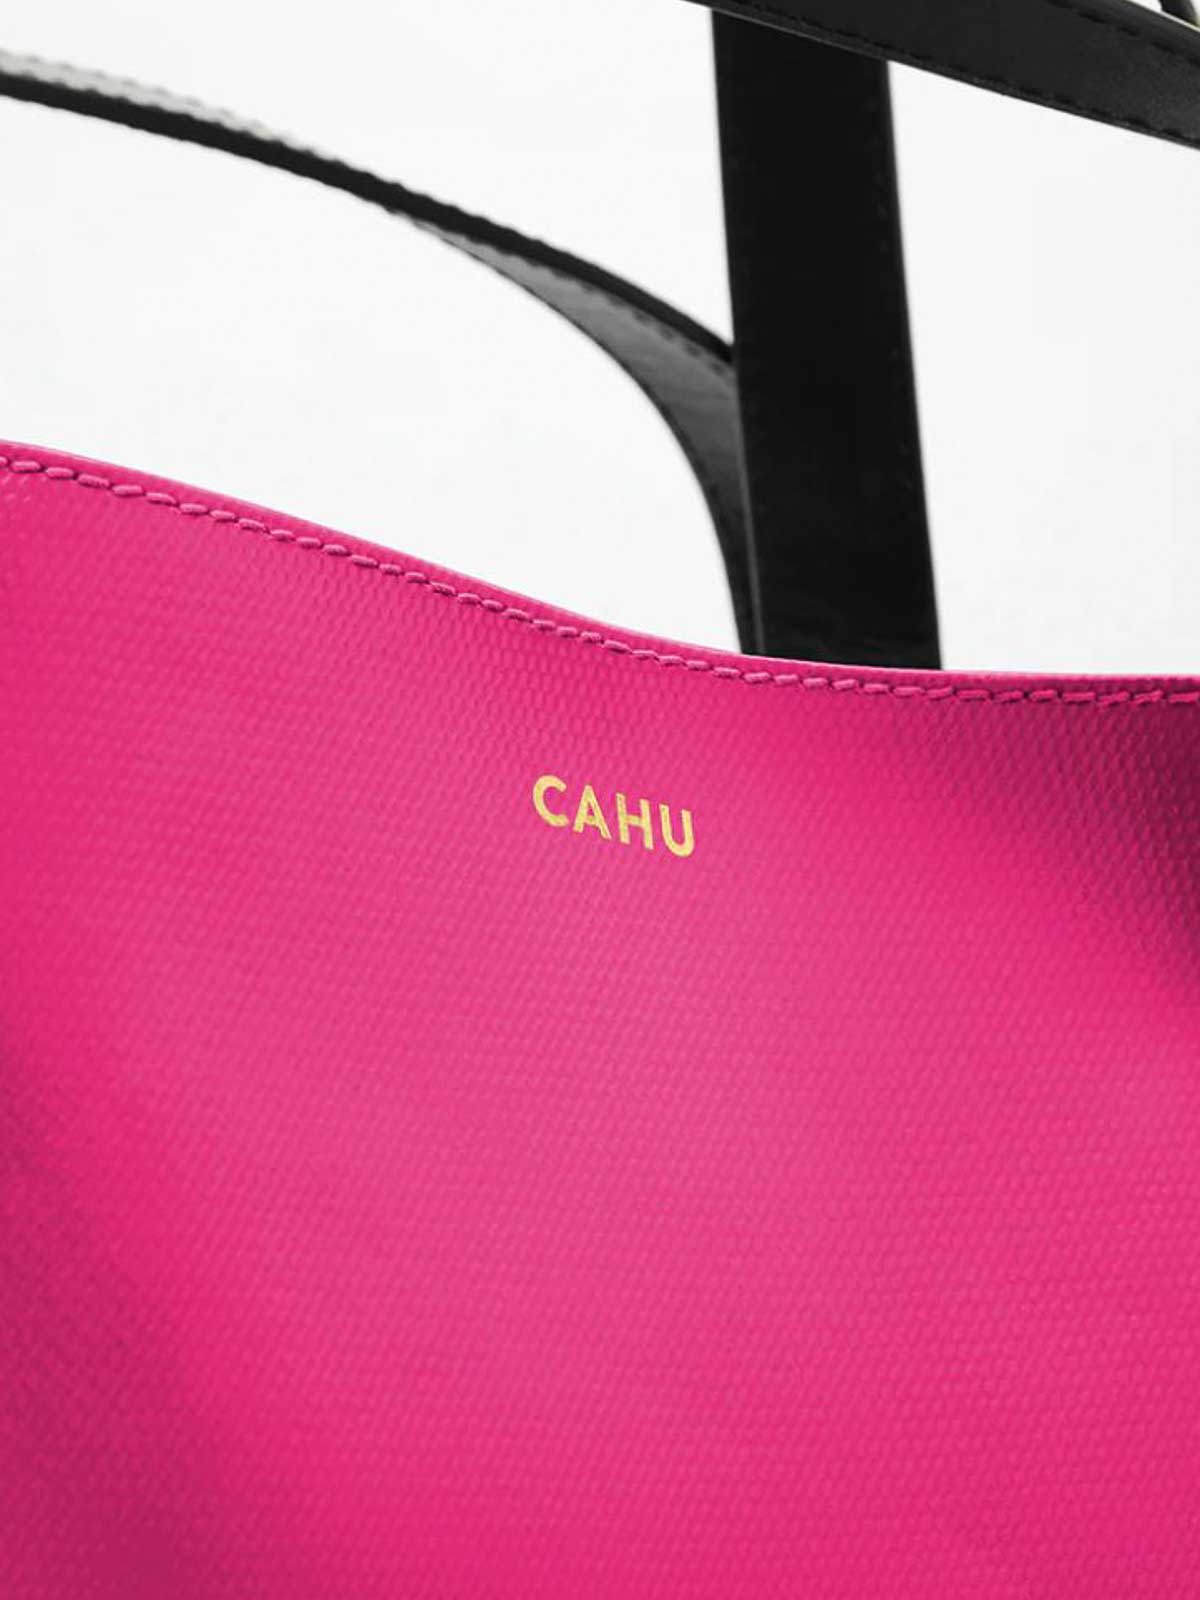 Shop Cahu Tote Bag In Pink